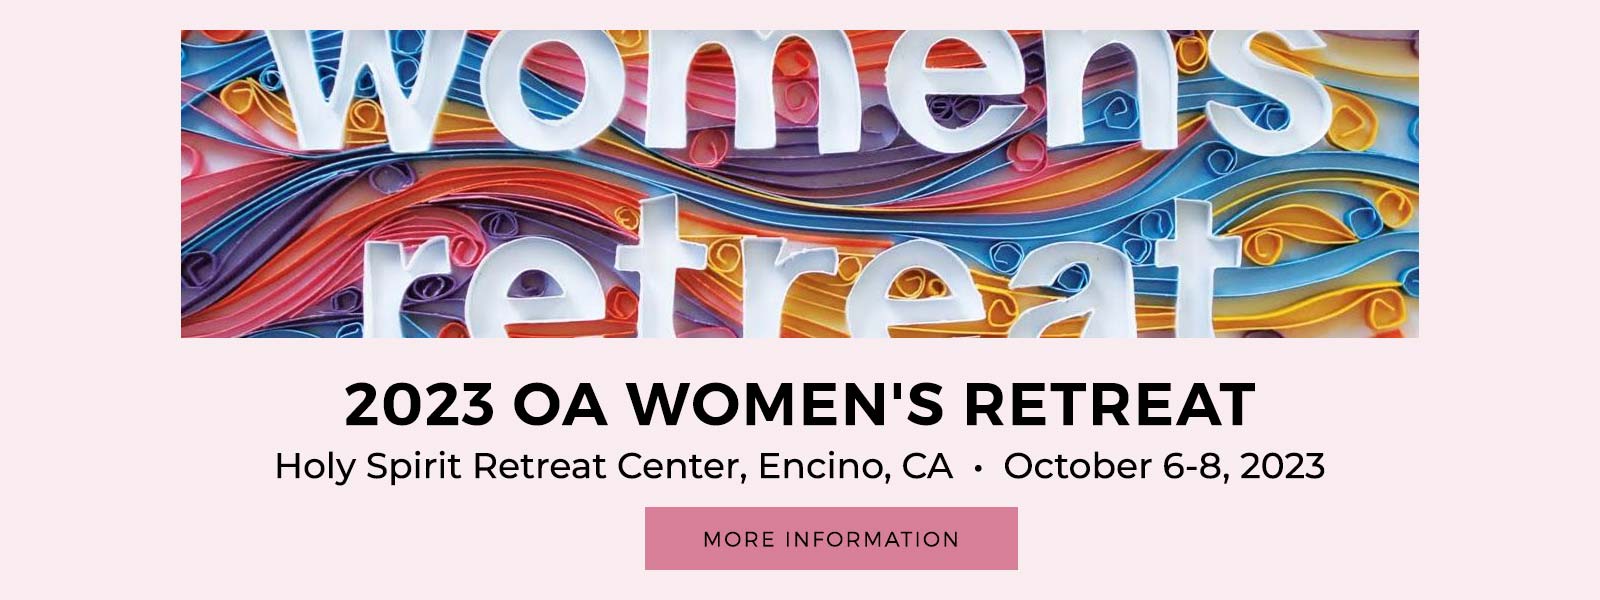 2023 OA Women's Retreat Registration - Holy Spirit Retreat Center, Encino • October 6-8, 2023